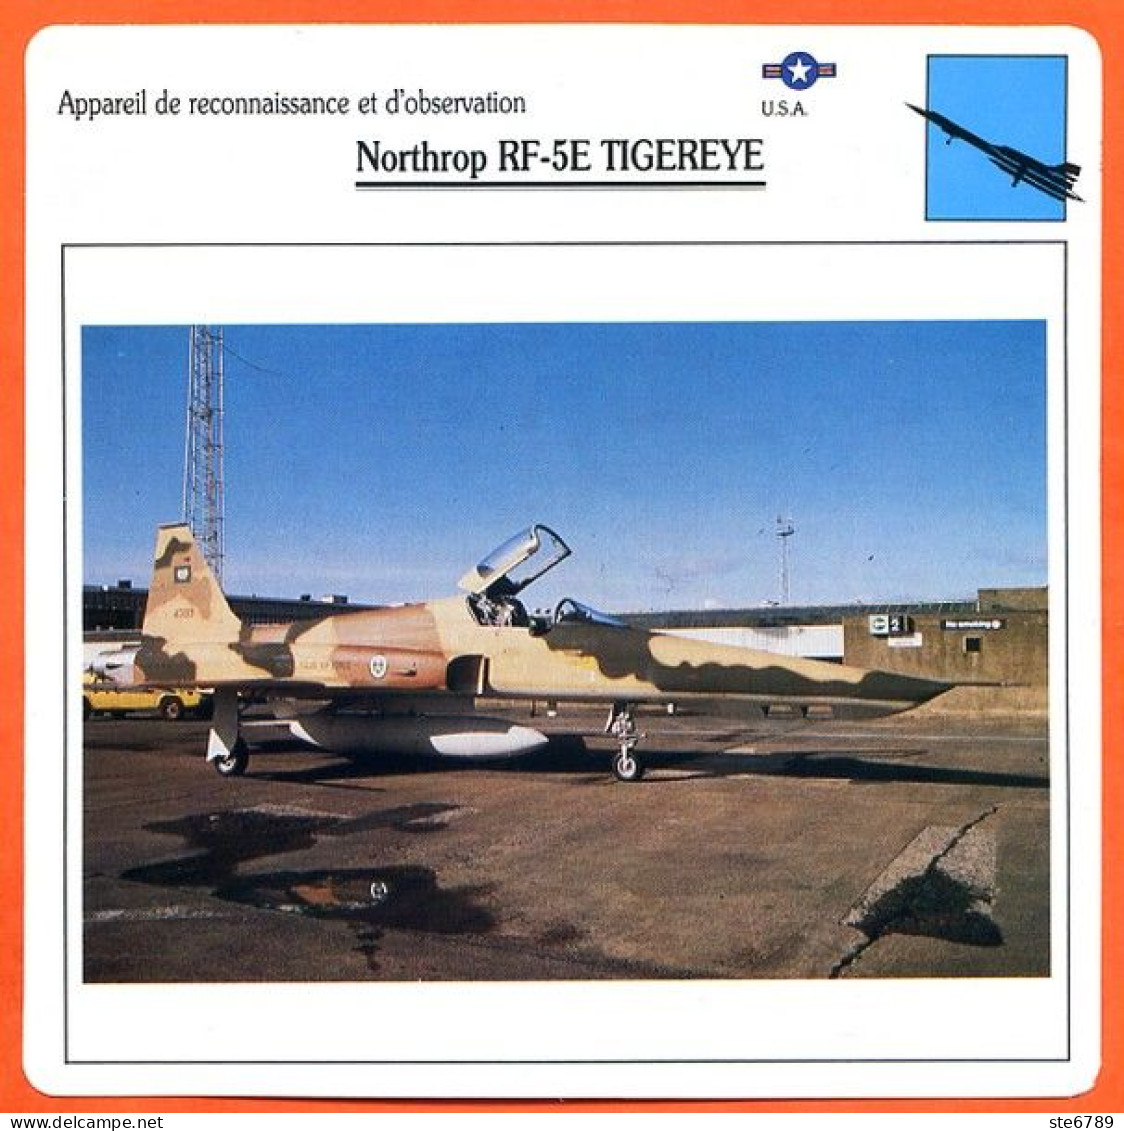 Fiche Aviation Northrop RF 5E TIGEREYE / Avion Reconnaissance Et Observation USA  Avions - Avions